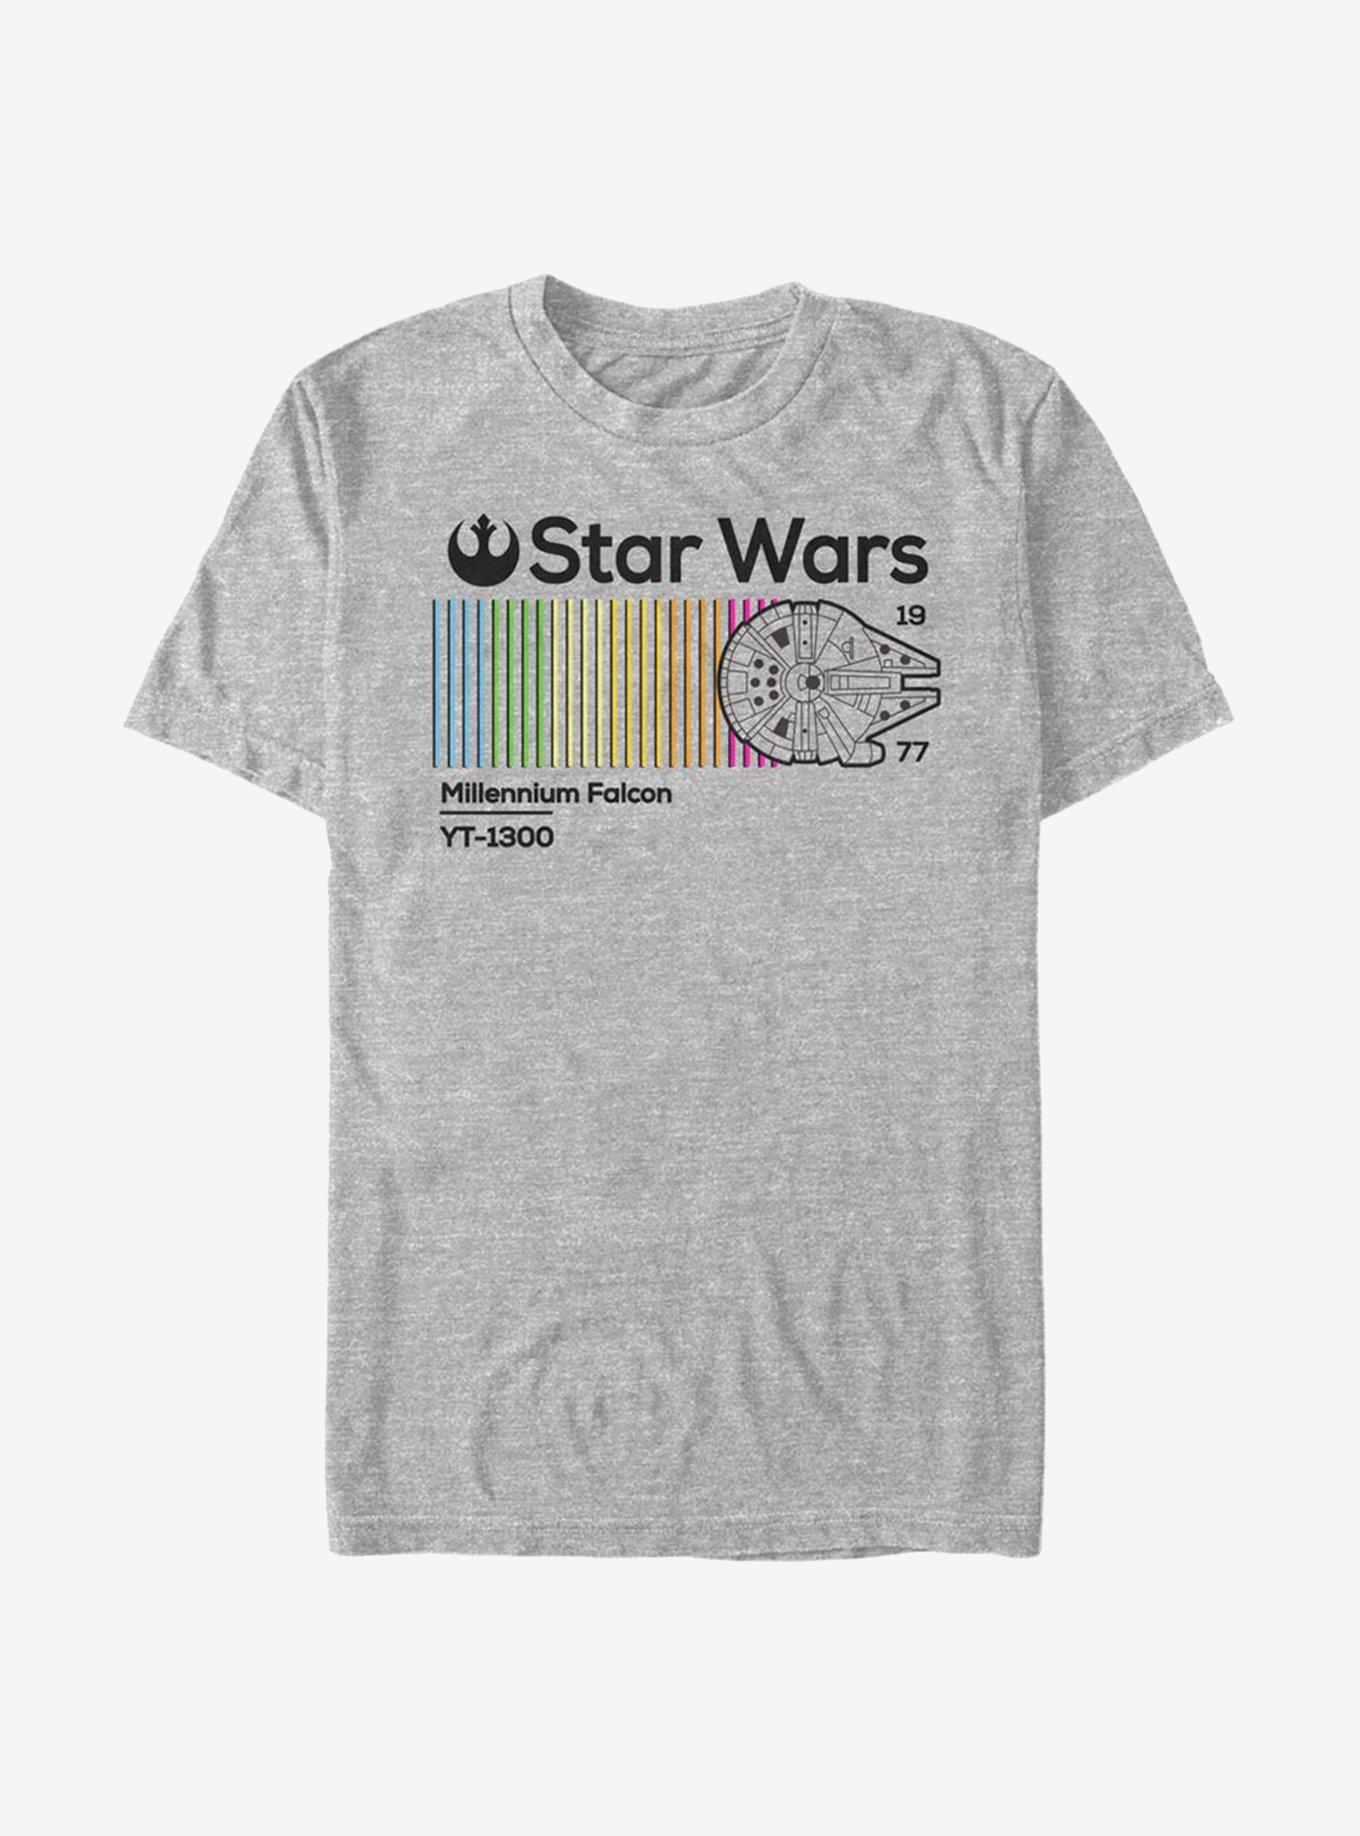 Star Wars Millennium Falcon Colored T-Shirt